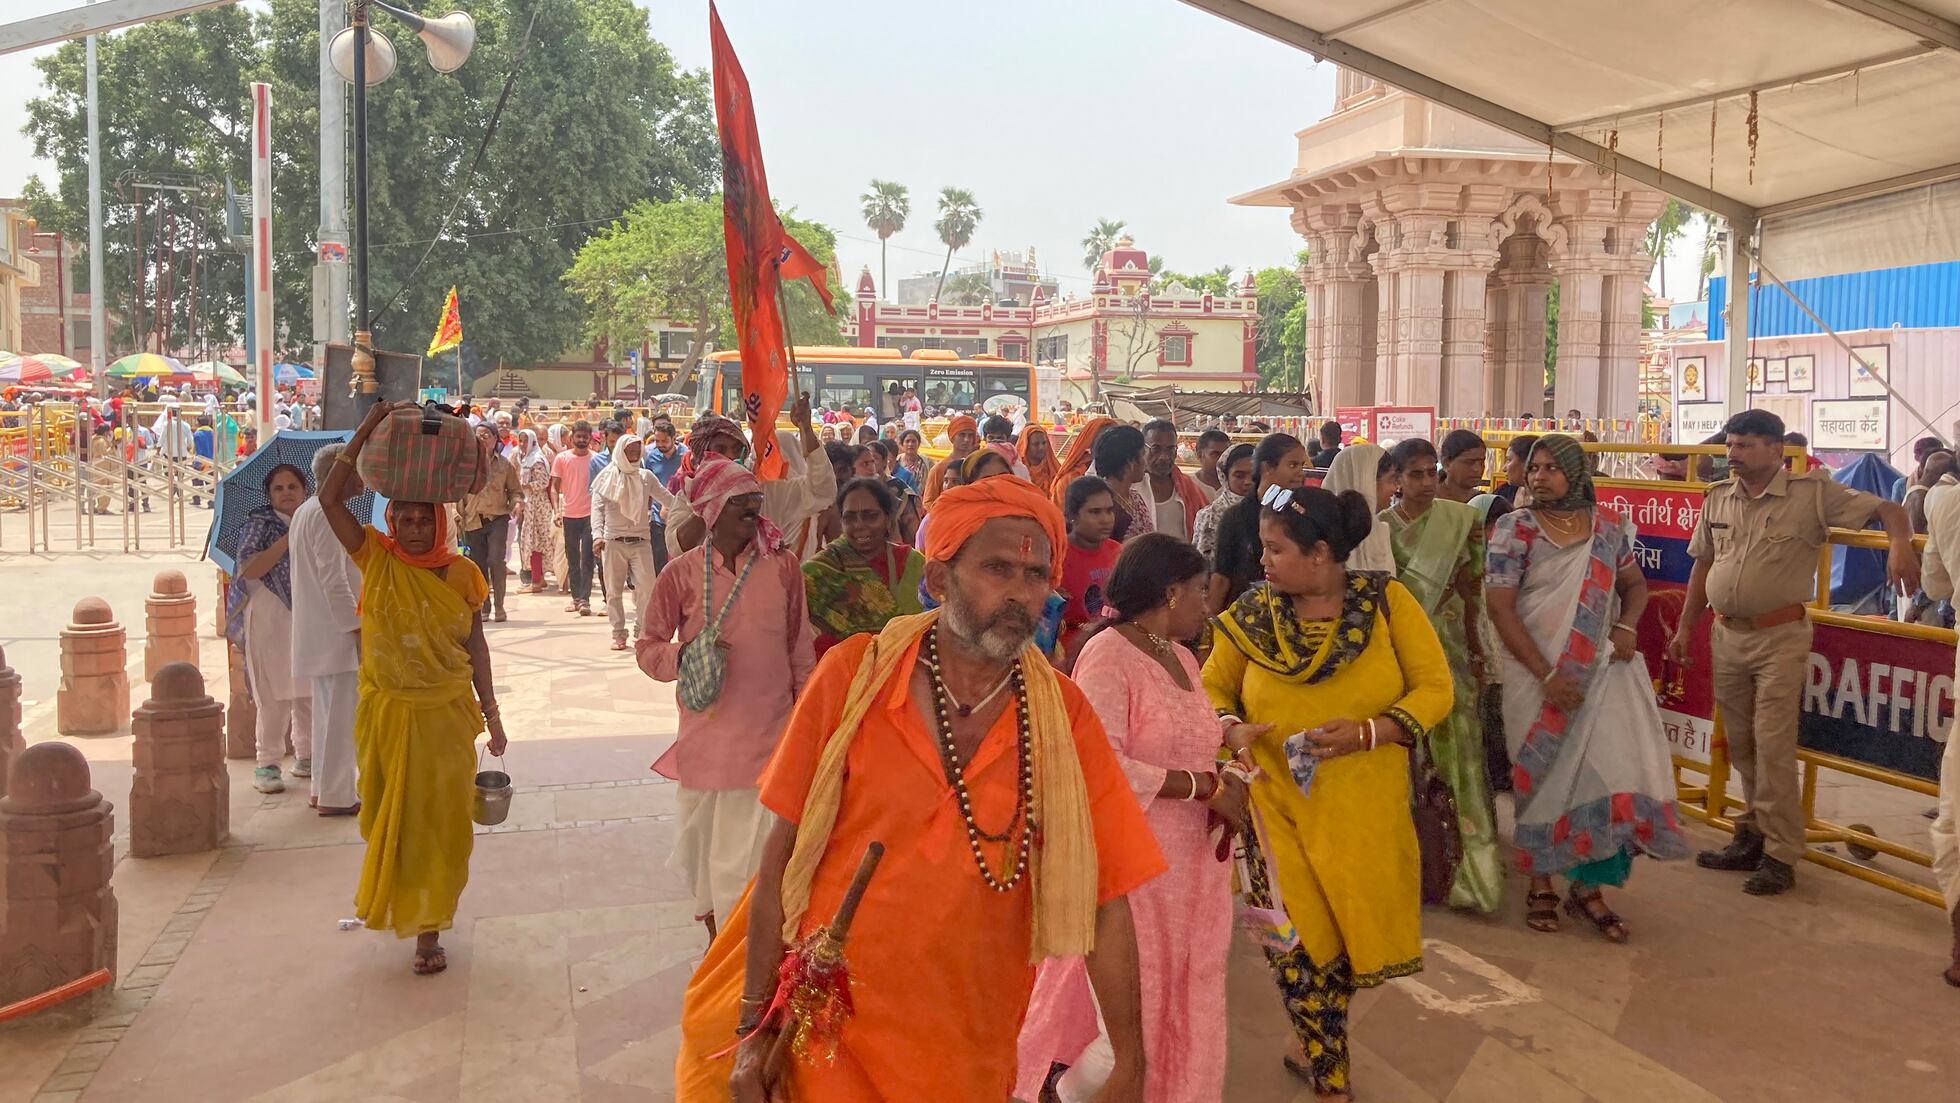 El templo hindú de Ram, símbolo del poder electoral de Modi en la India